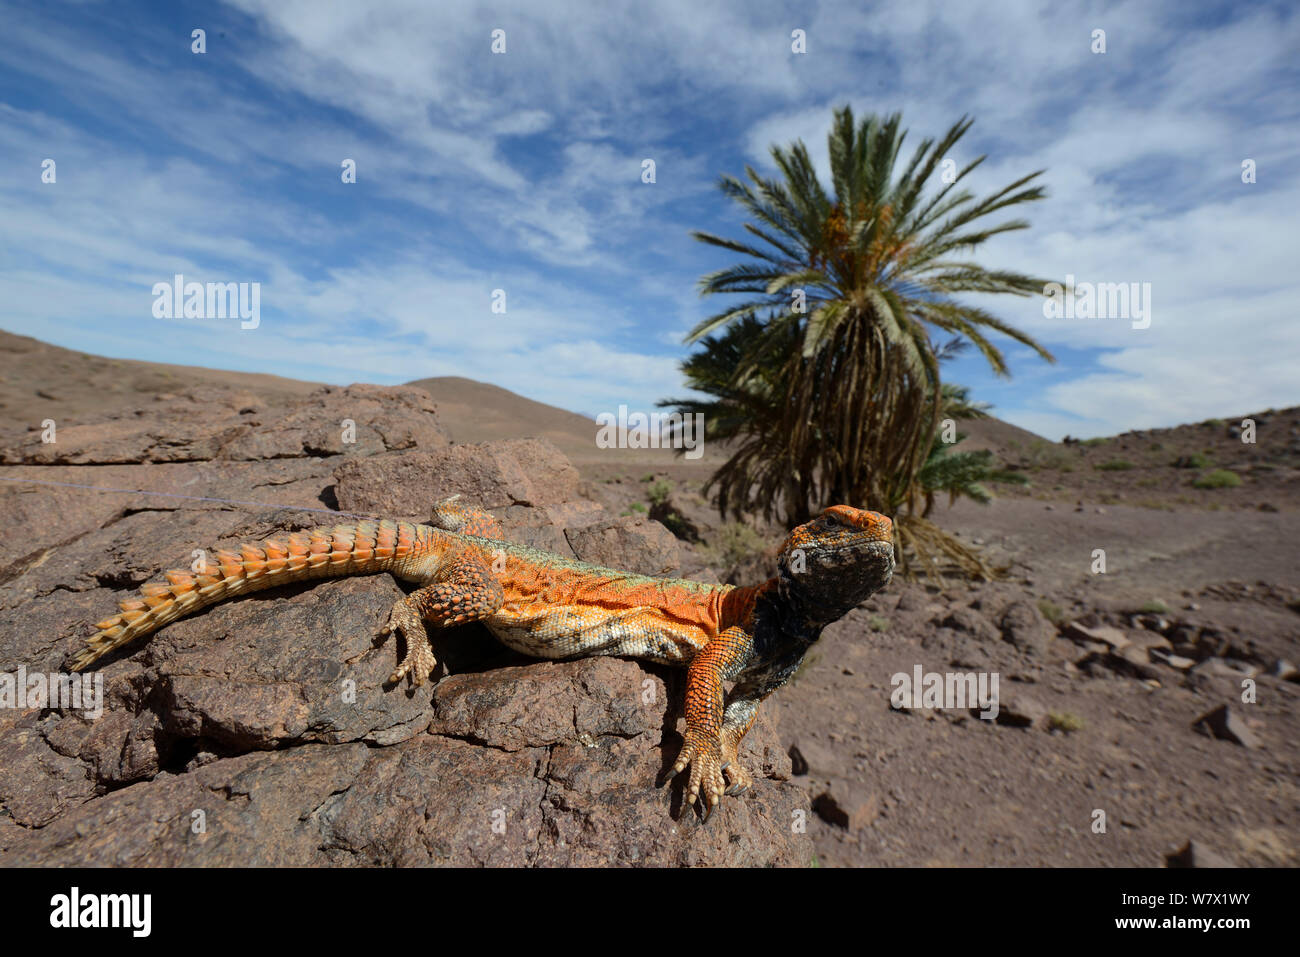 Spiny-tailed lizard (Uromastyx nigriventris) in habitat, near Ouarzazate, Morocco. Stock Photo